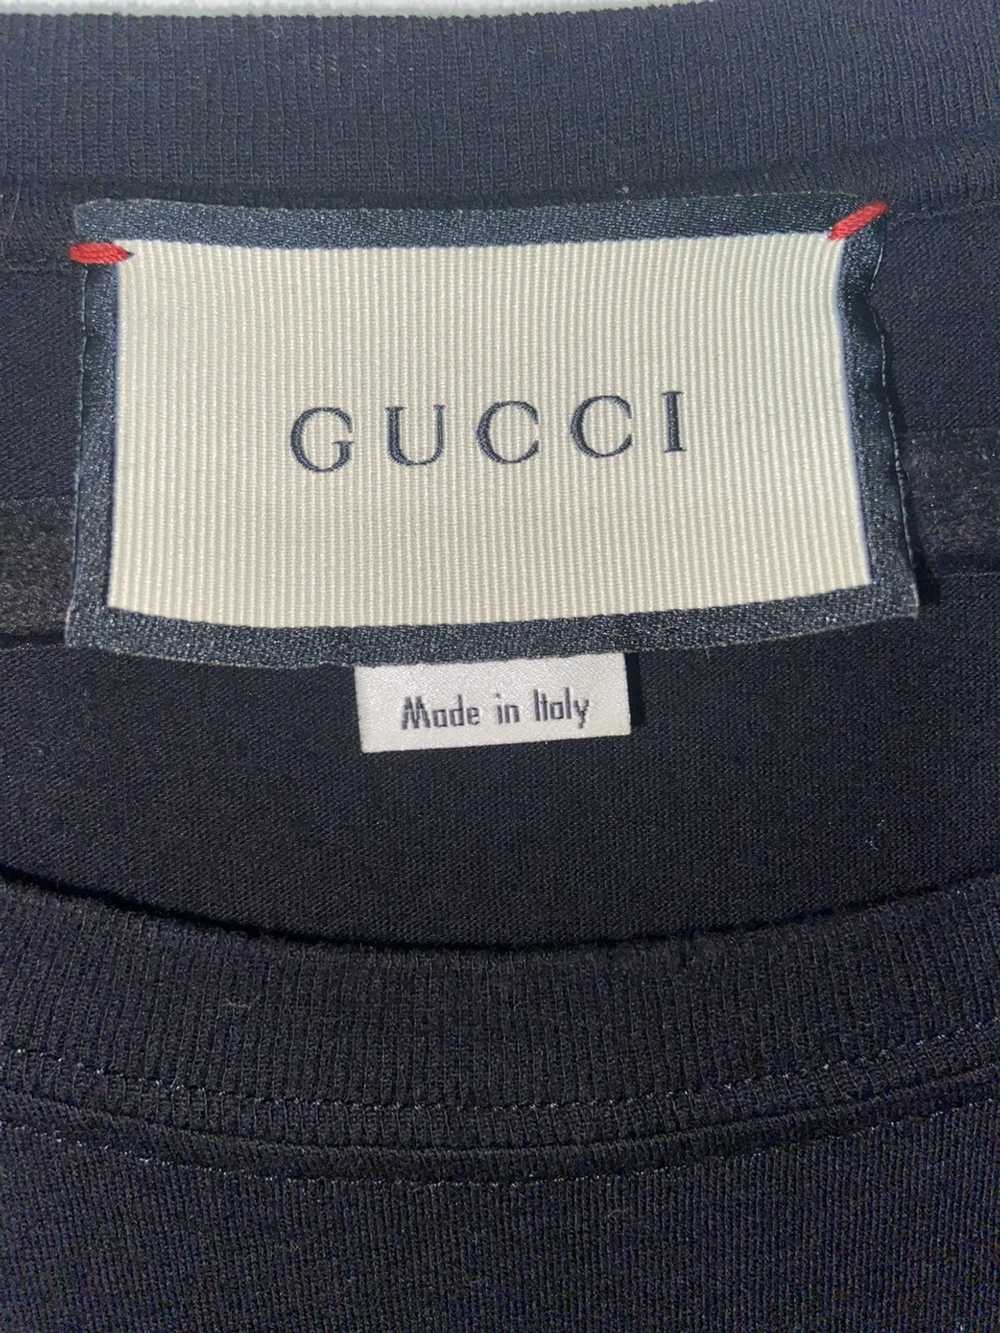 Gucci Gucci shirt - image 4